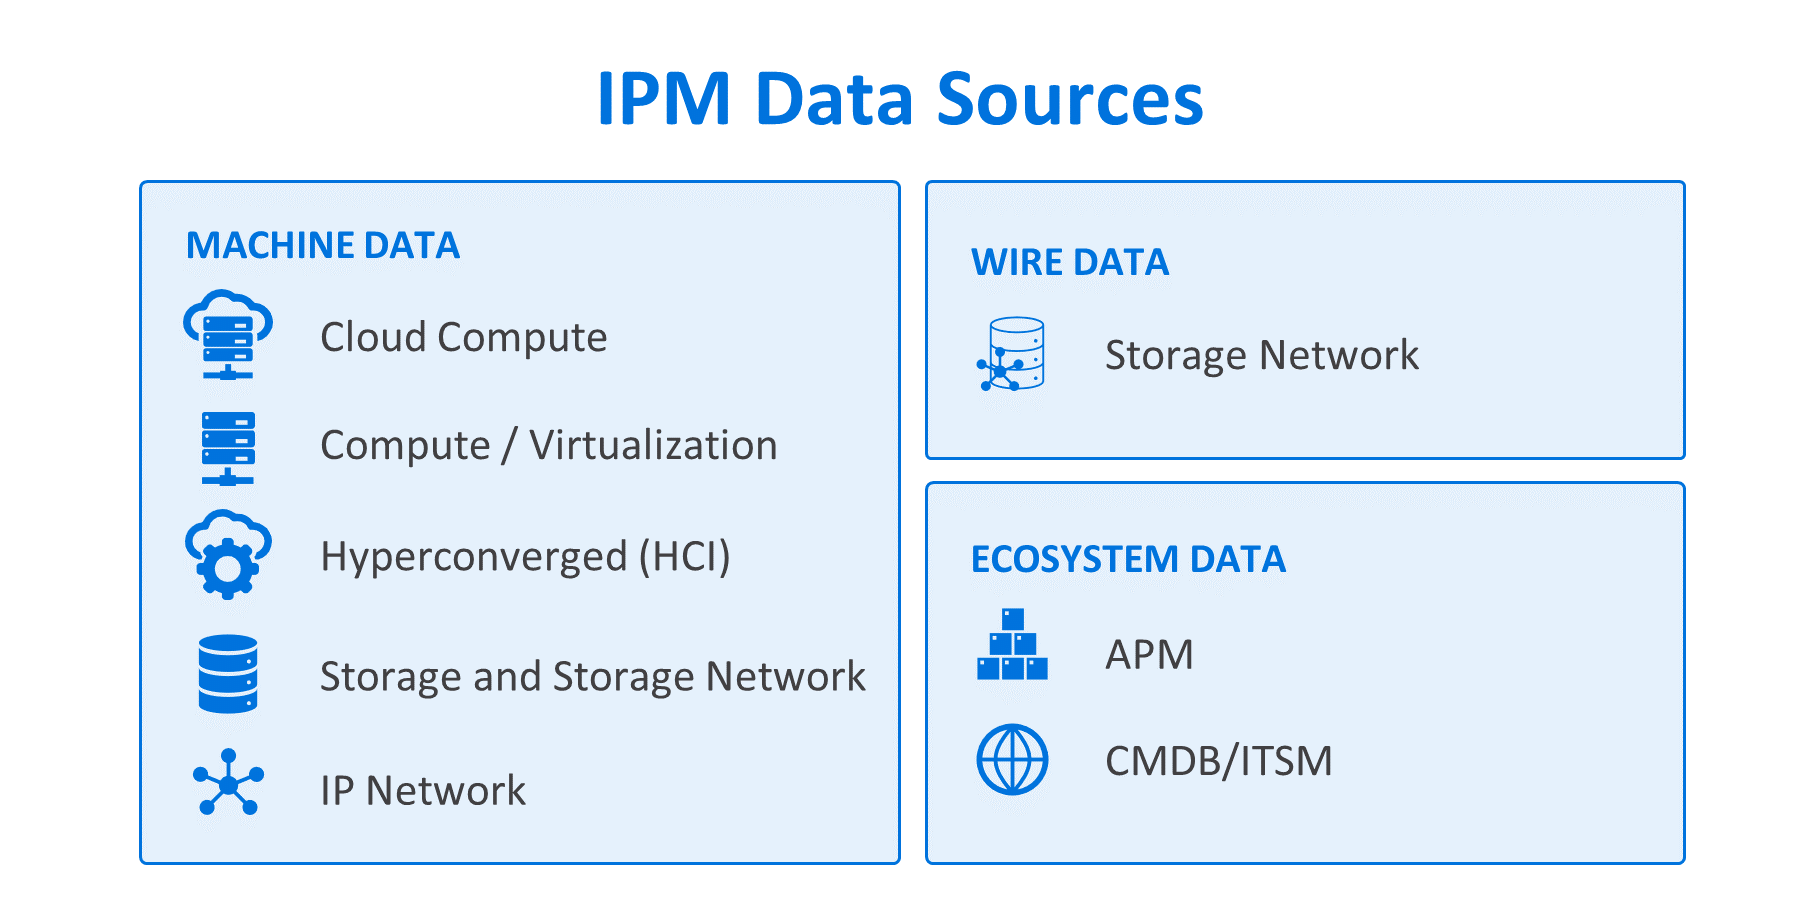 IPM data sources